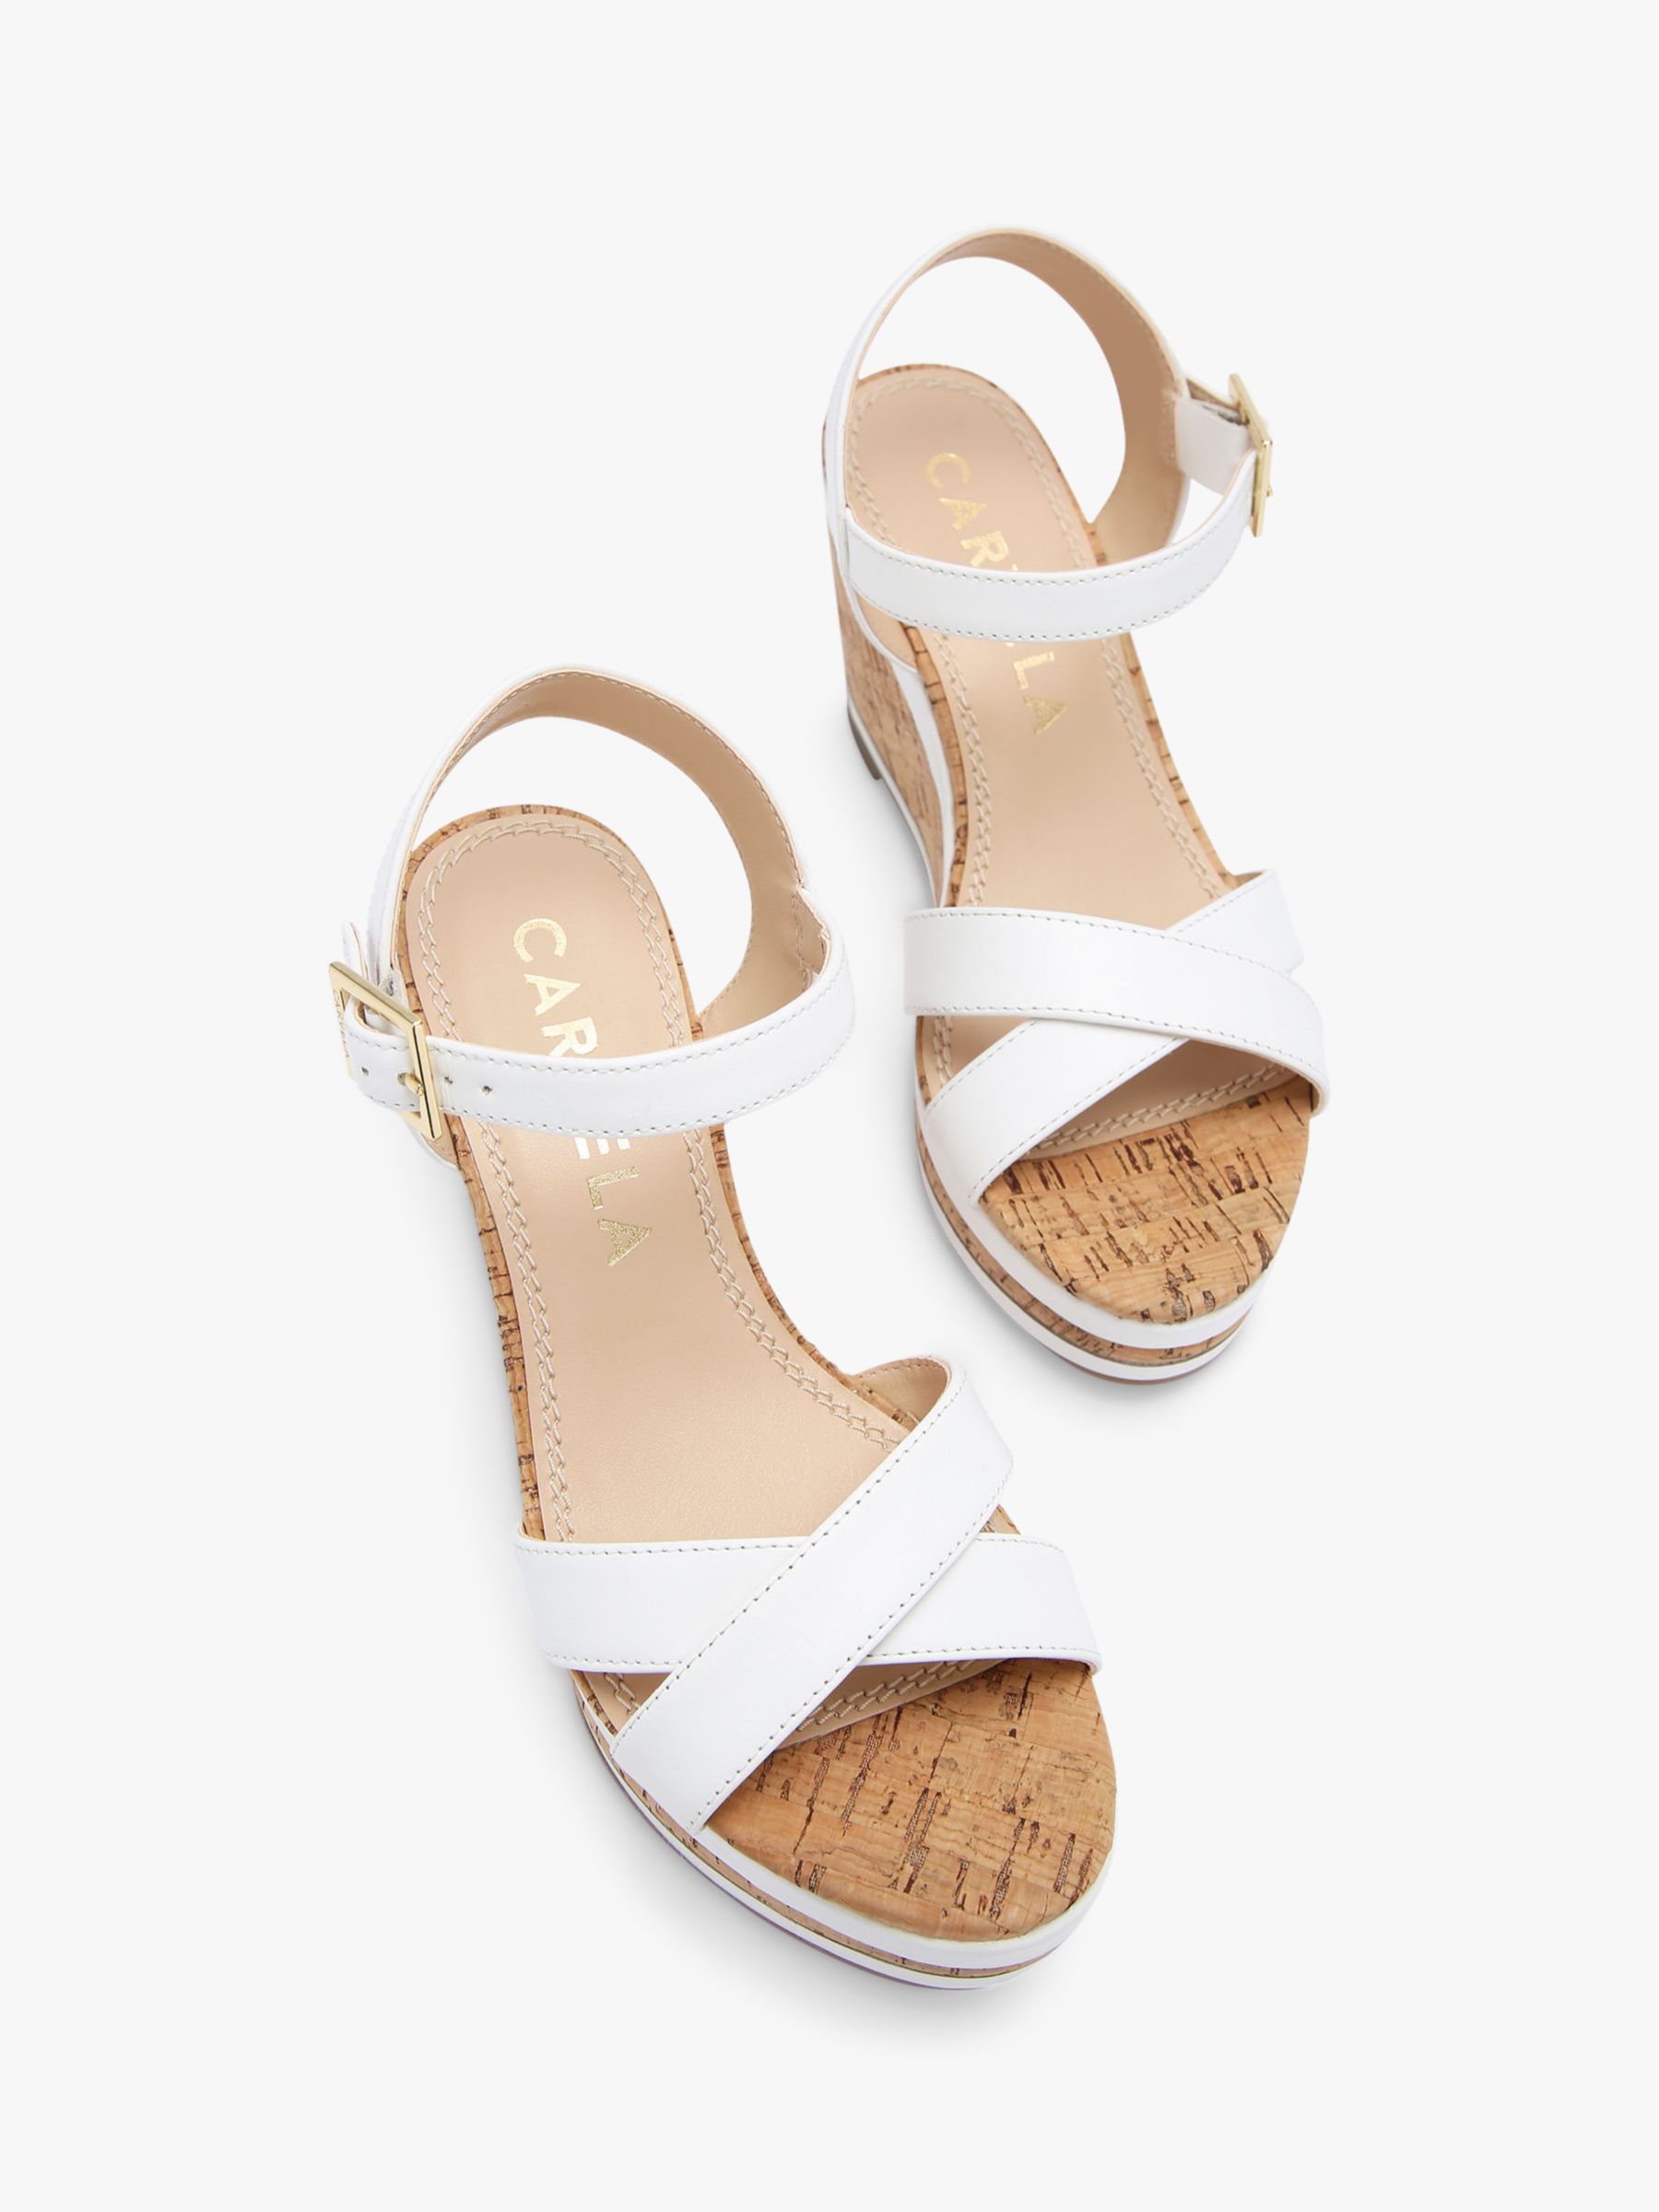 Carvela Kendall Wedge Sandals, White at John Lewis & Partners